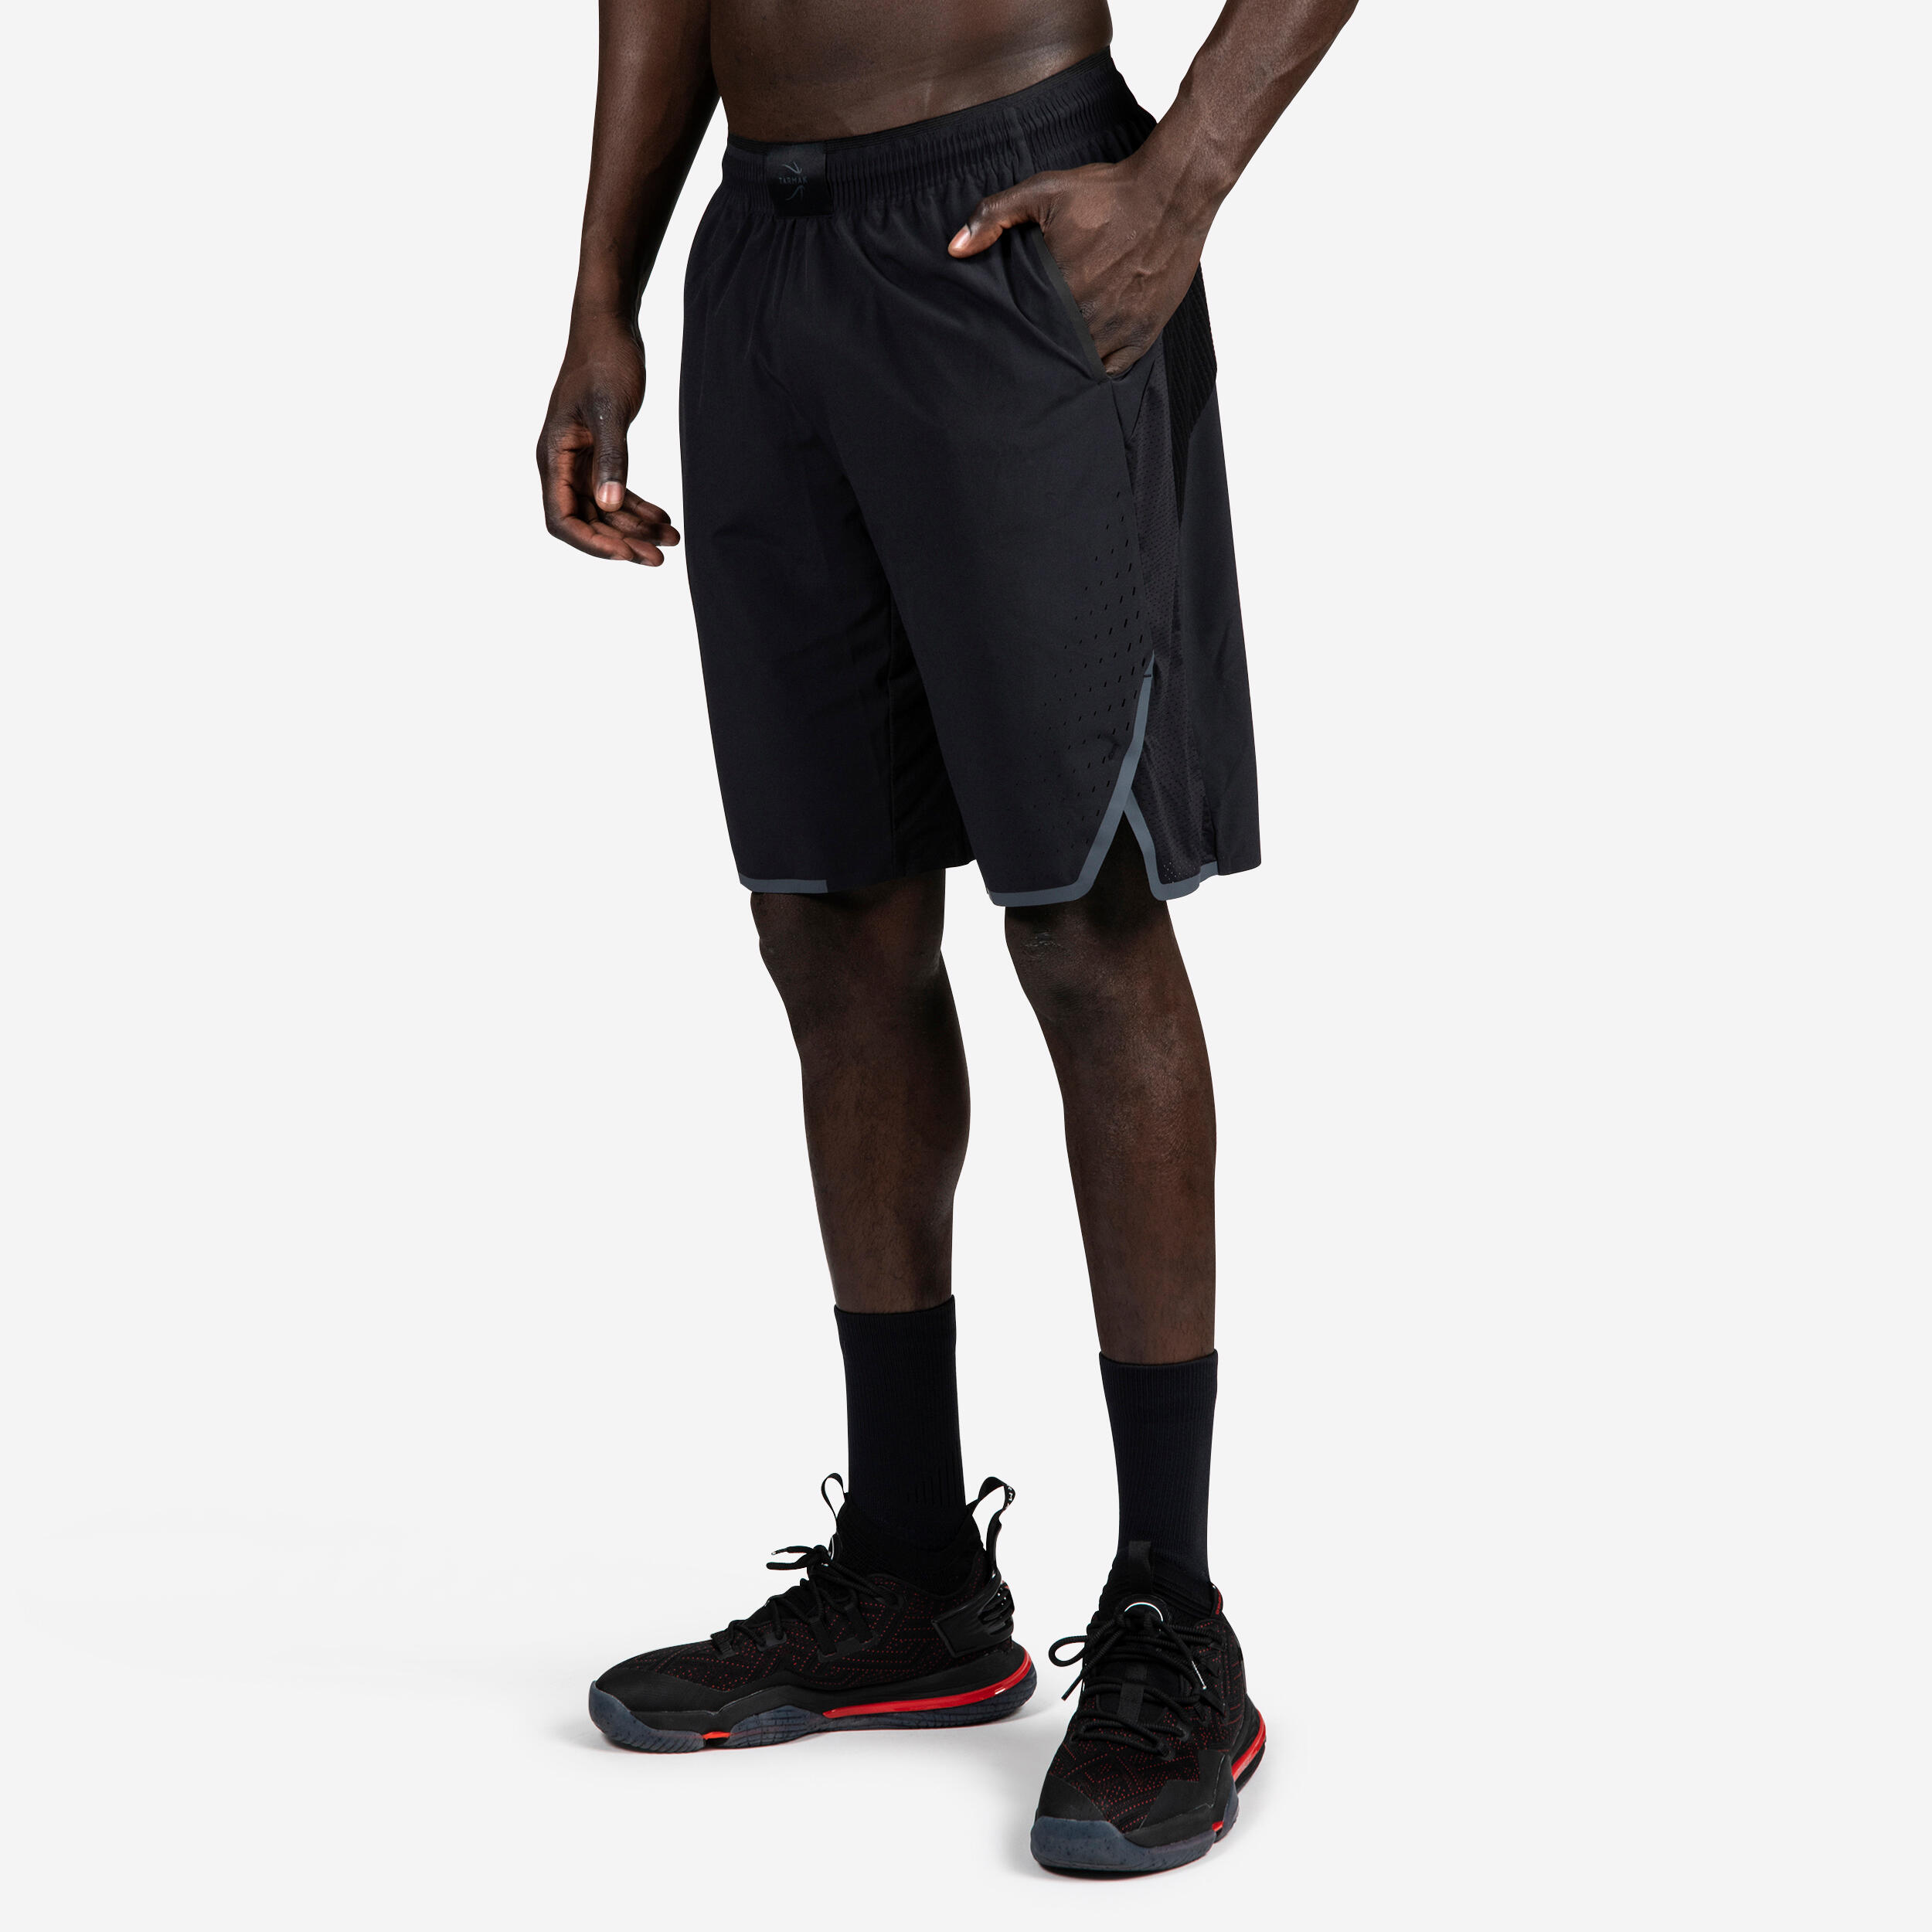 FDSNFV Uomo Chicago Bulls Basket Pantaloncini Sportivi Traspiranti Ad Alta Elasticità Ad Asciugatura Rapida 